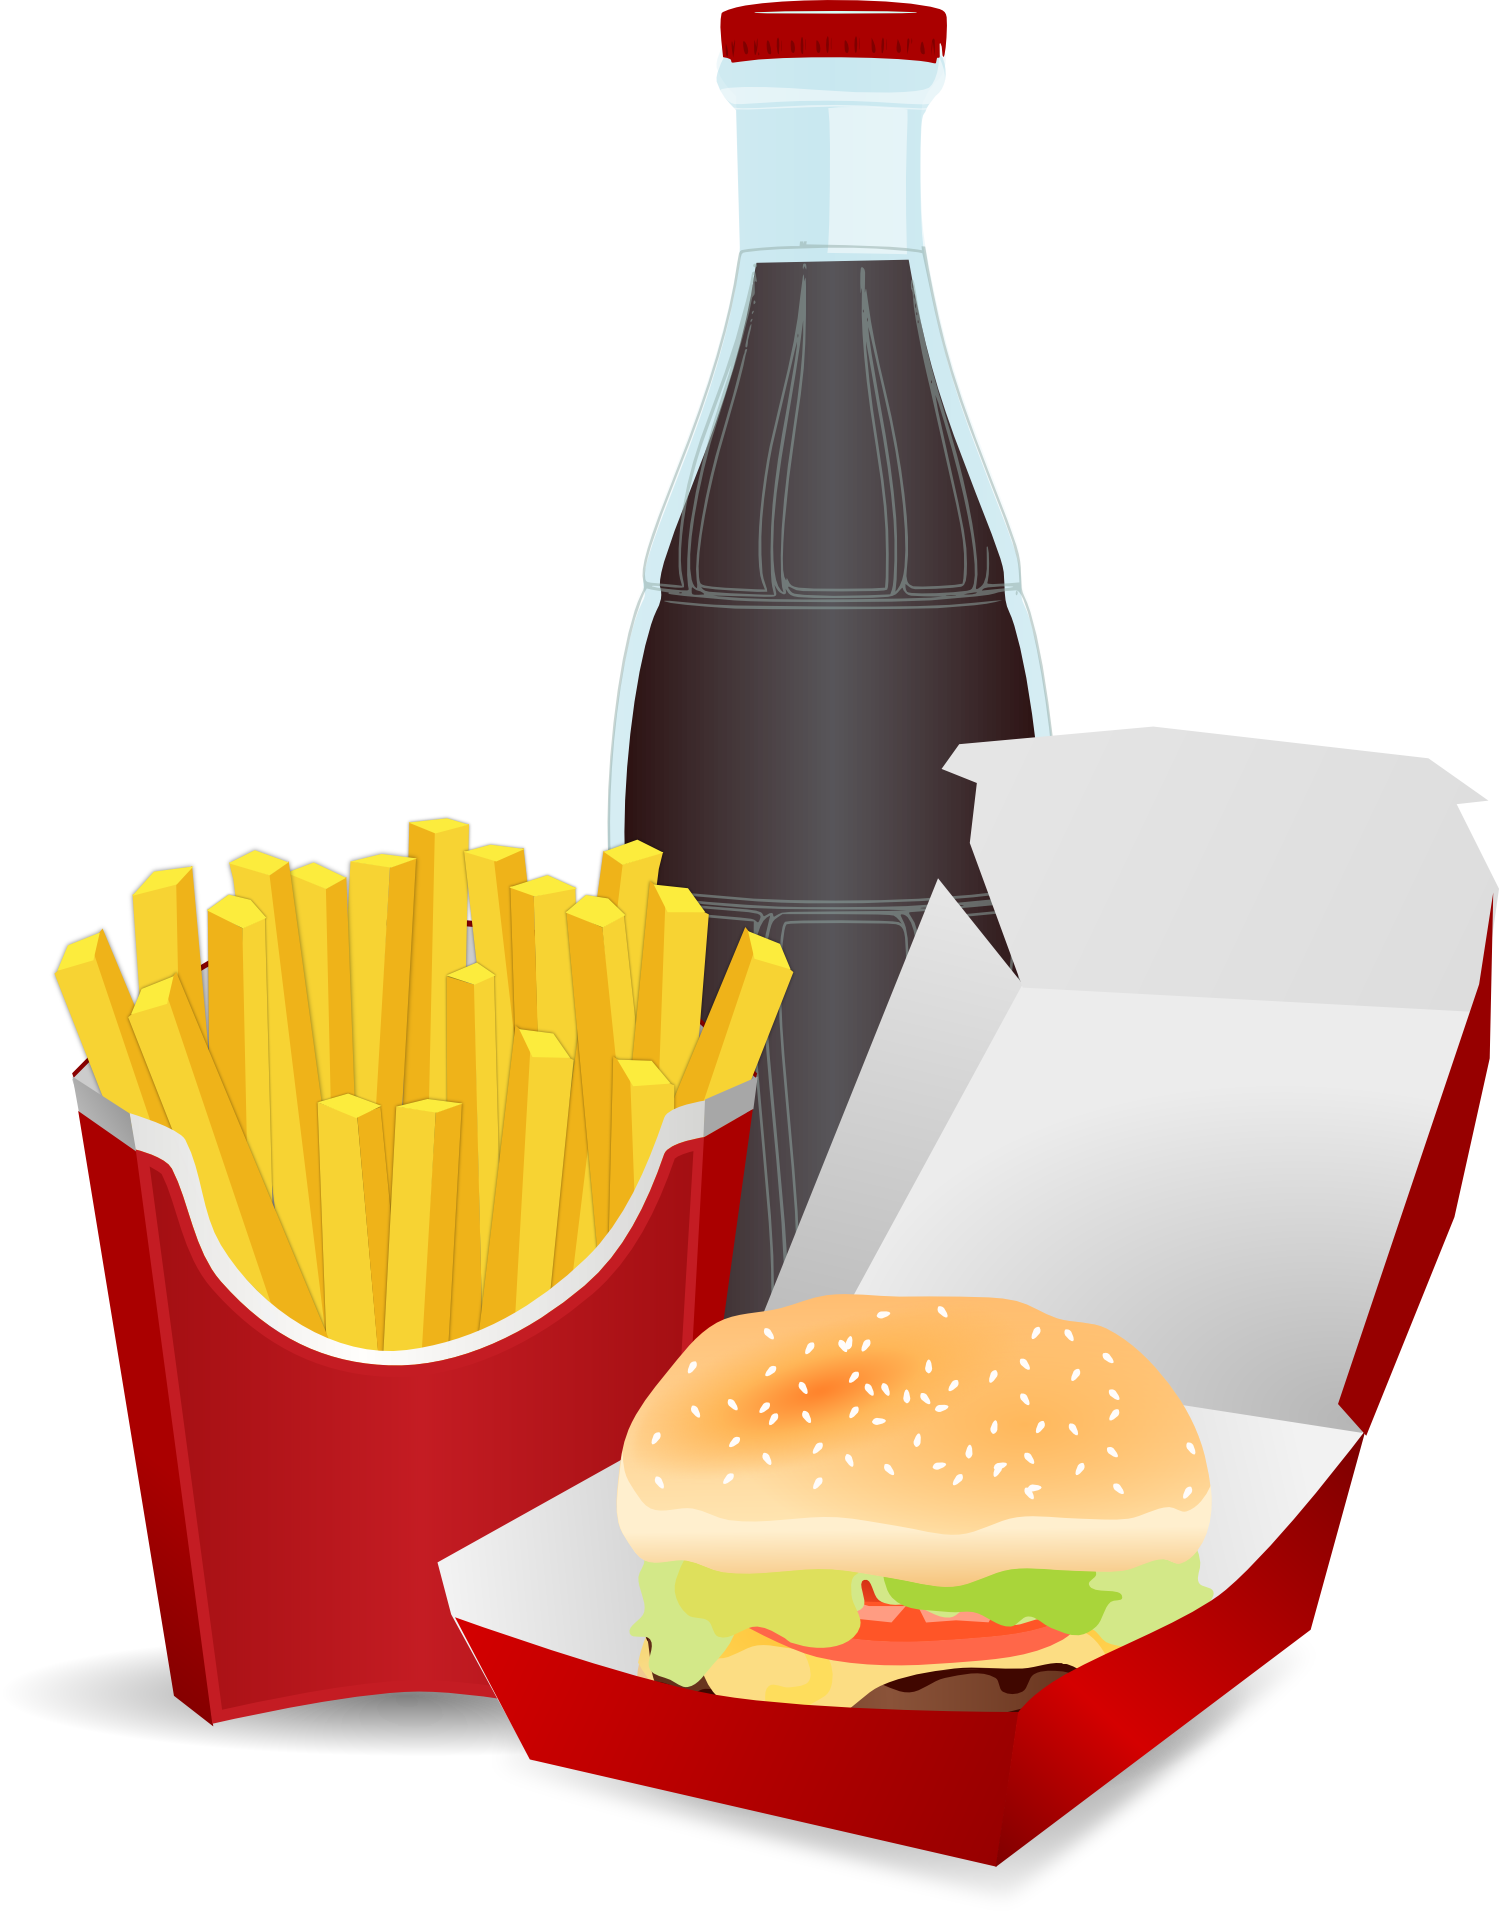 Drawing of fries, cheeseburger, and coke